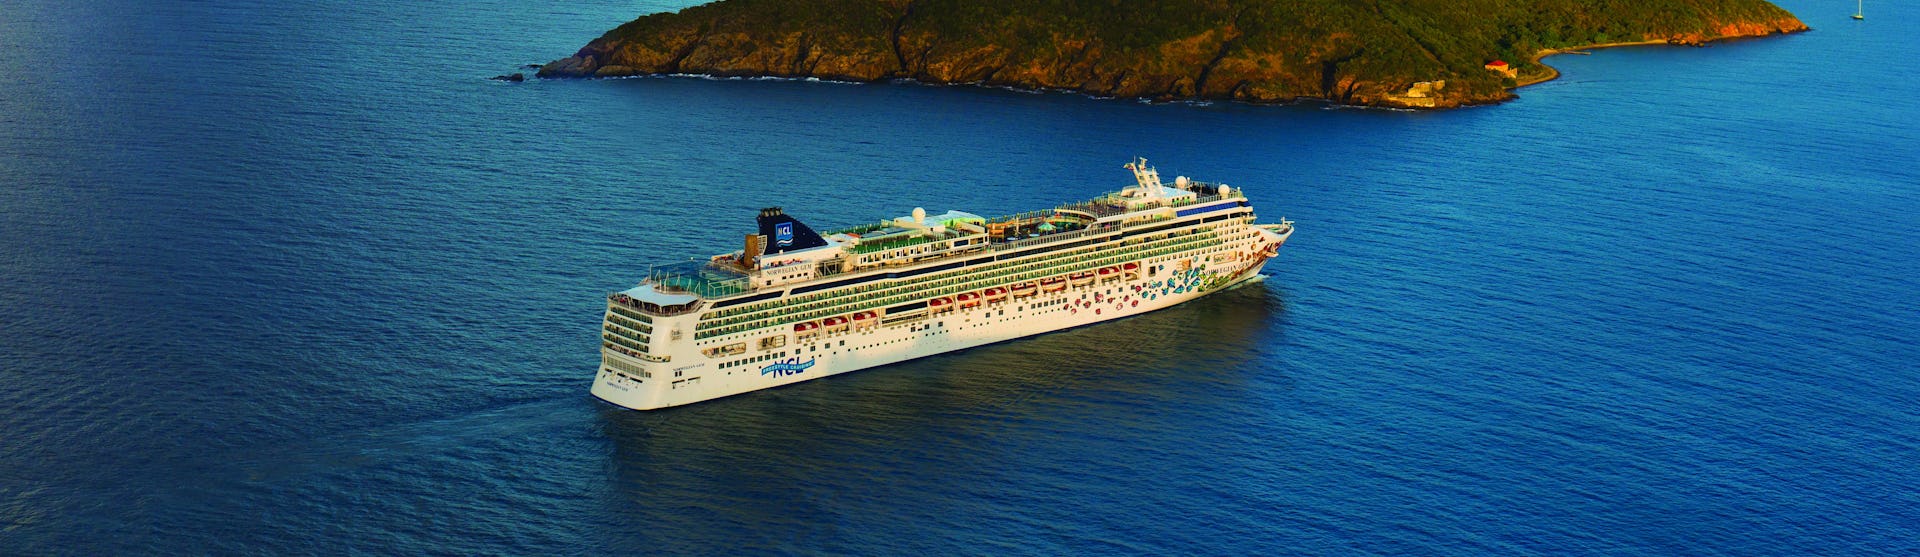 Norwegian Gem - Norwegian Cruise Line 